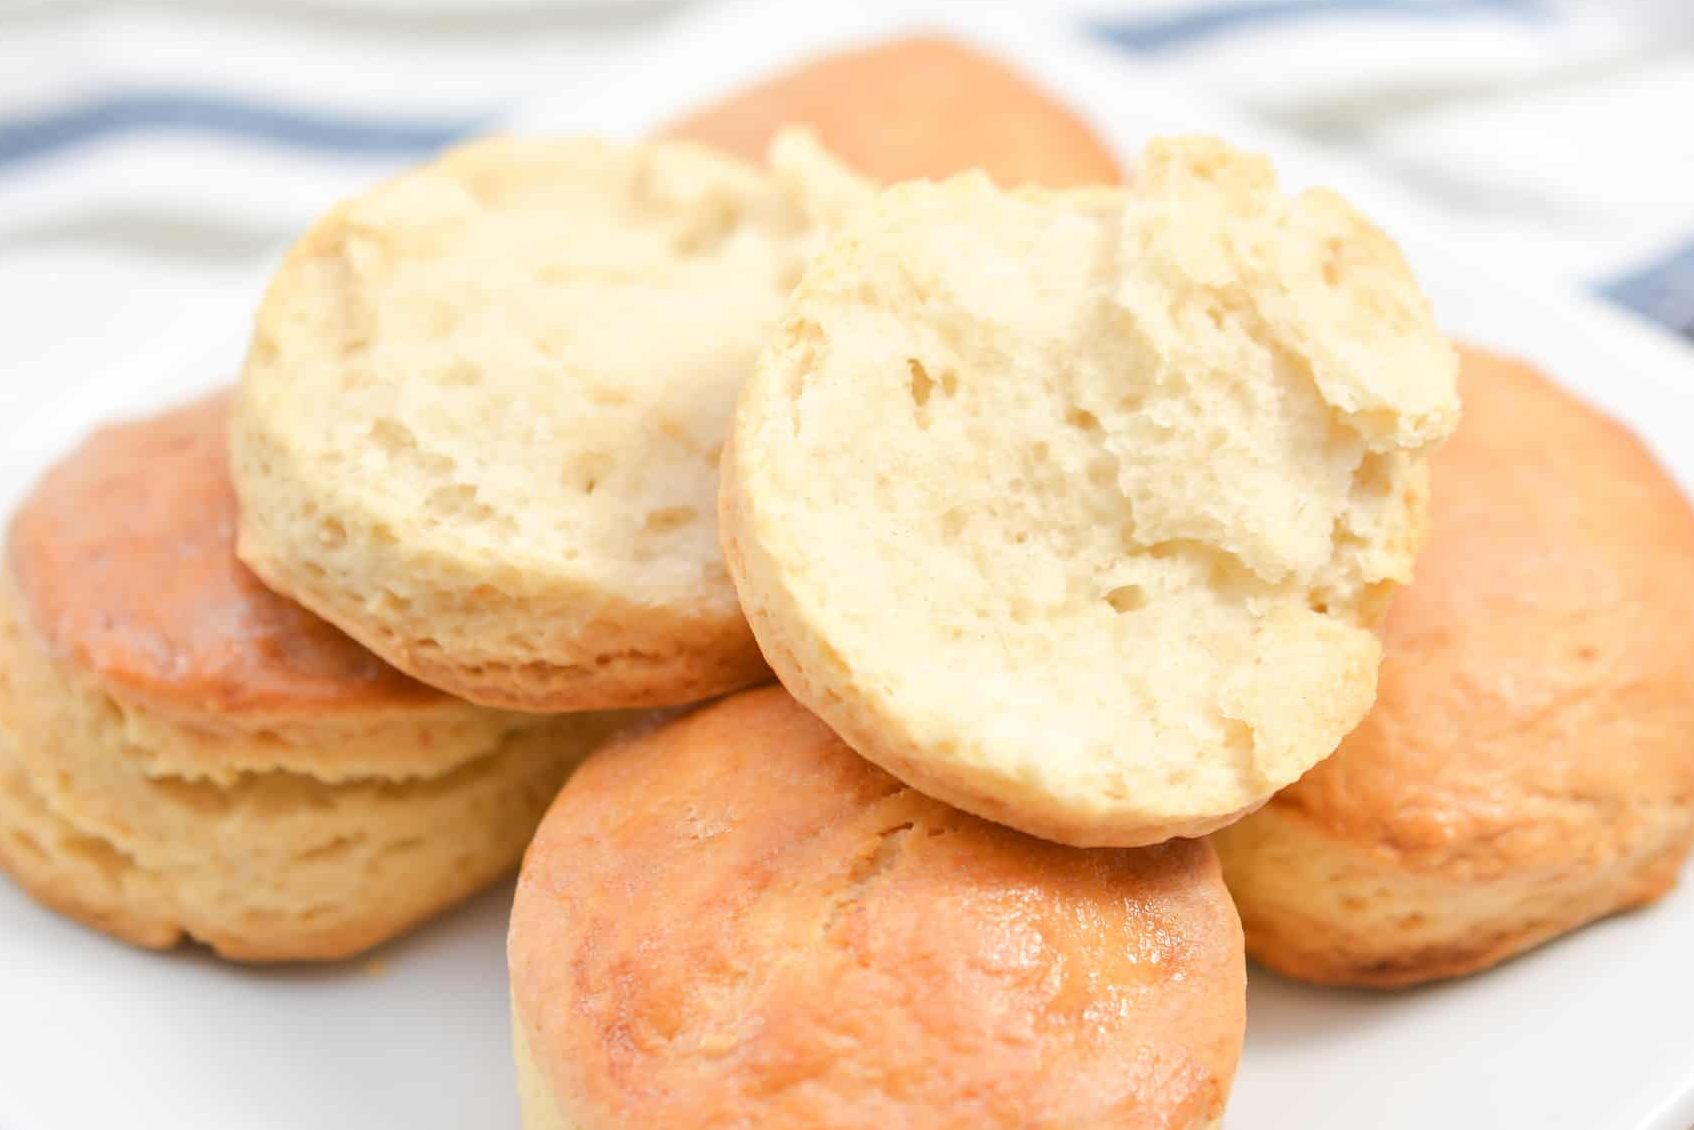 kfc biscuit recipe, best homemade biscuits